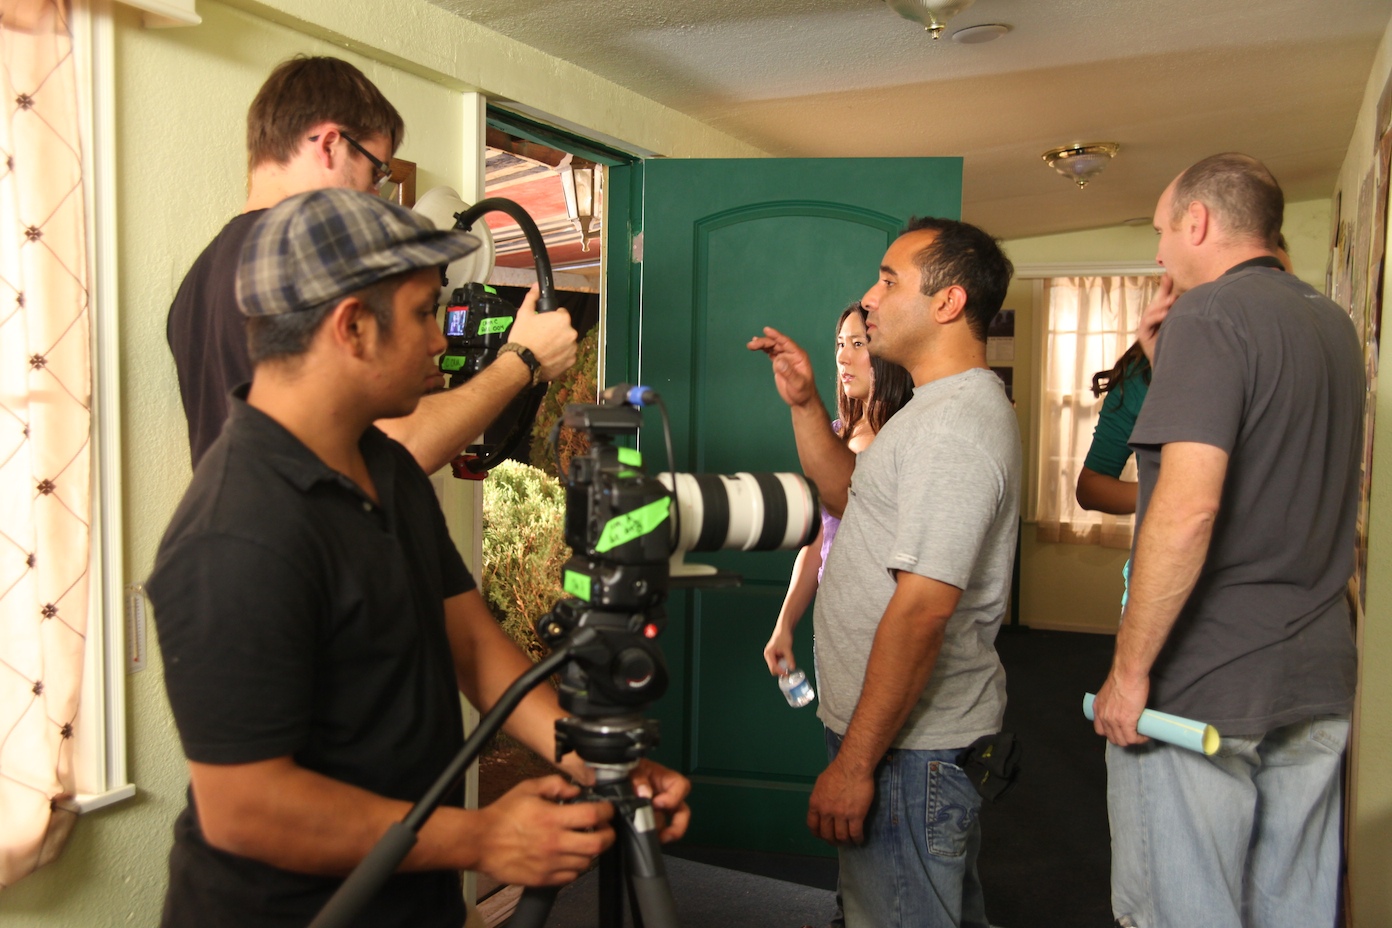 Cinematographer Peter Lugo on Location - The Pod